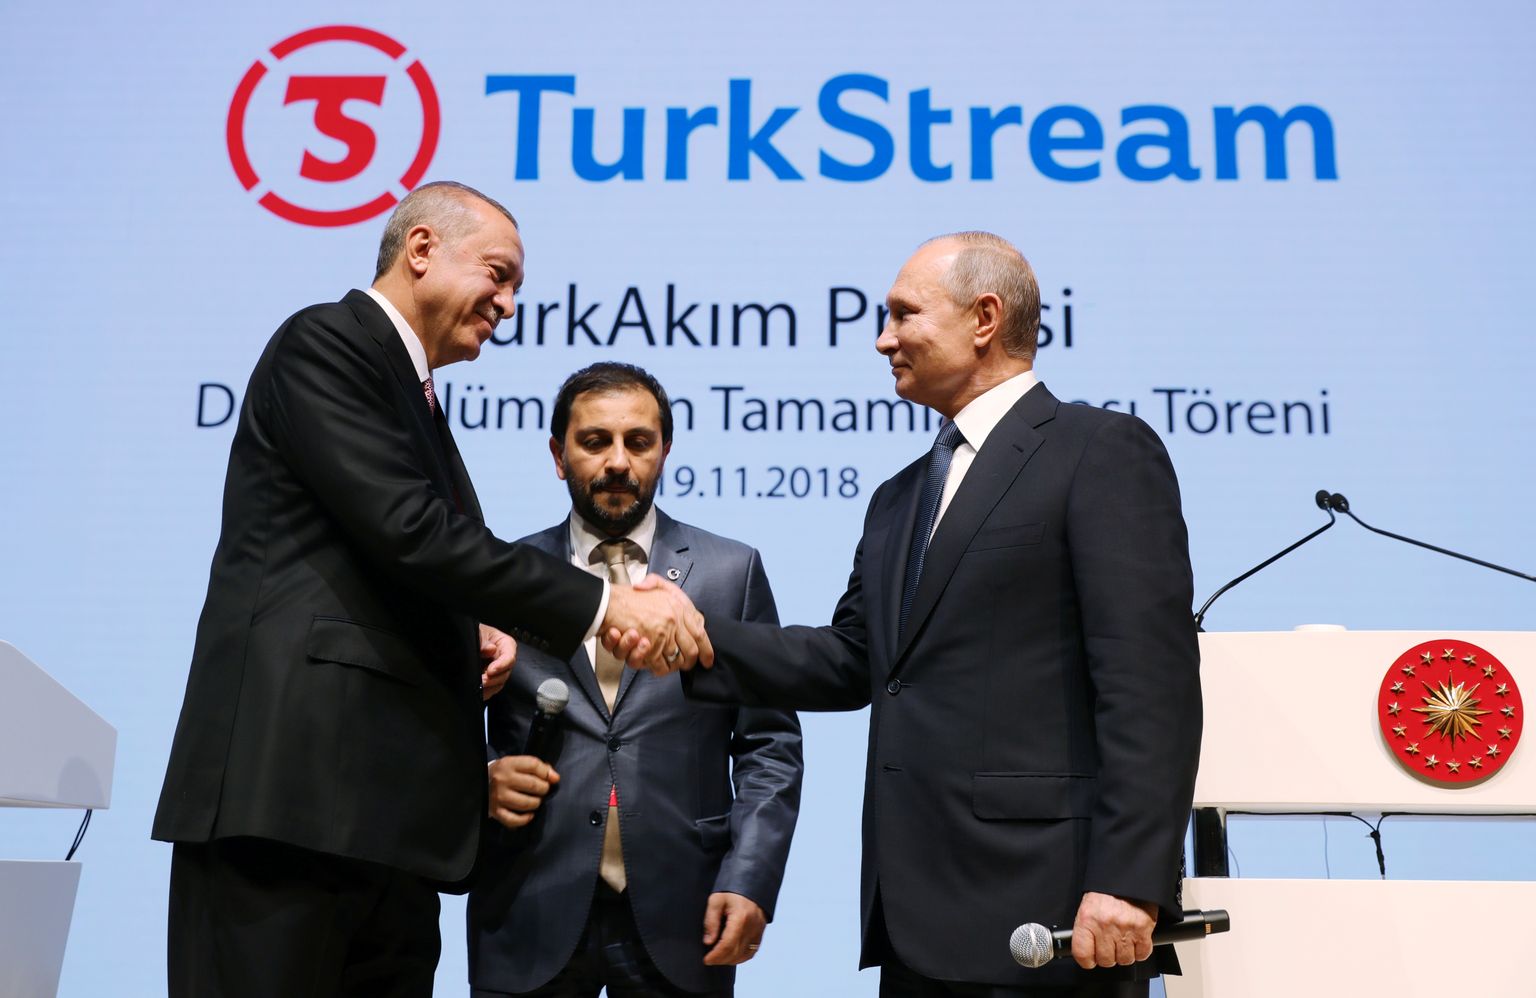 Venemaa president Vladimir Putin kätleb Türgi presidendi Tayyip Erdoganiga TurkStreami tseremoonial.